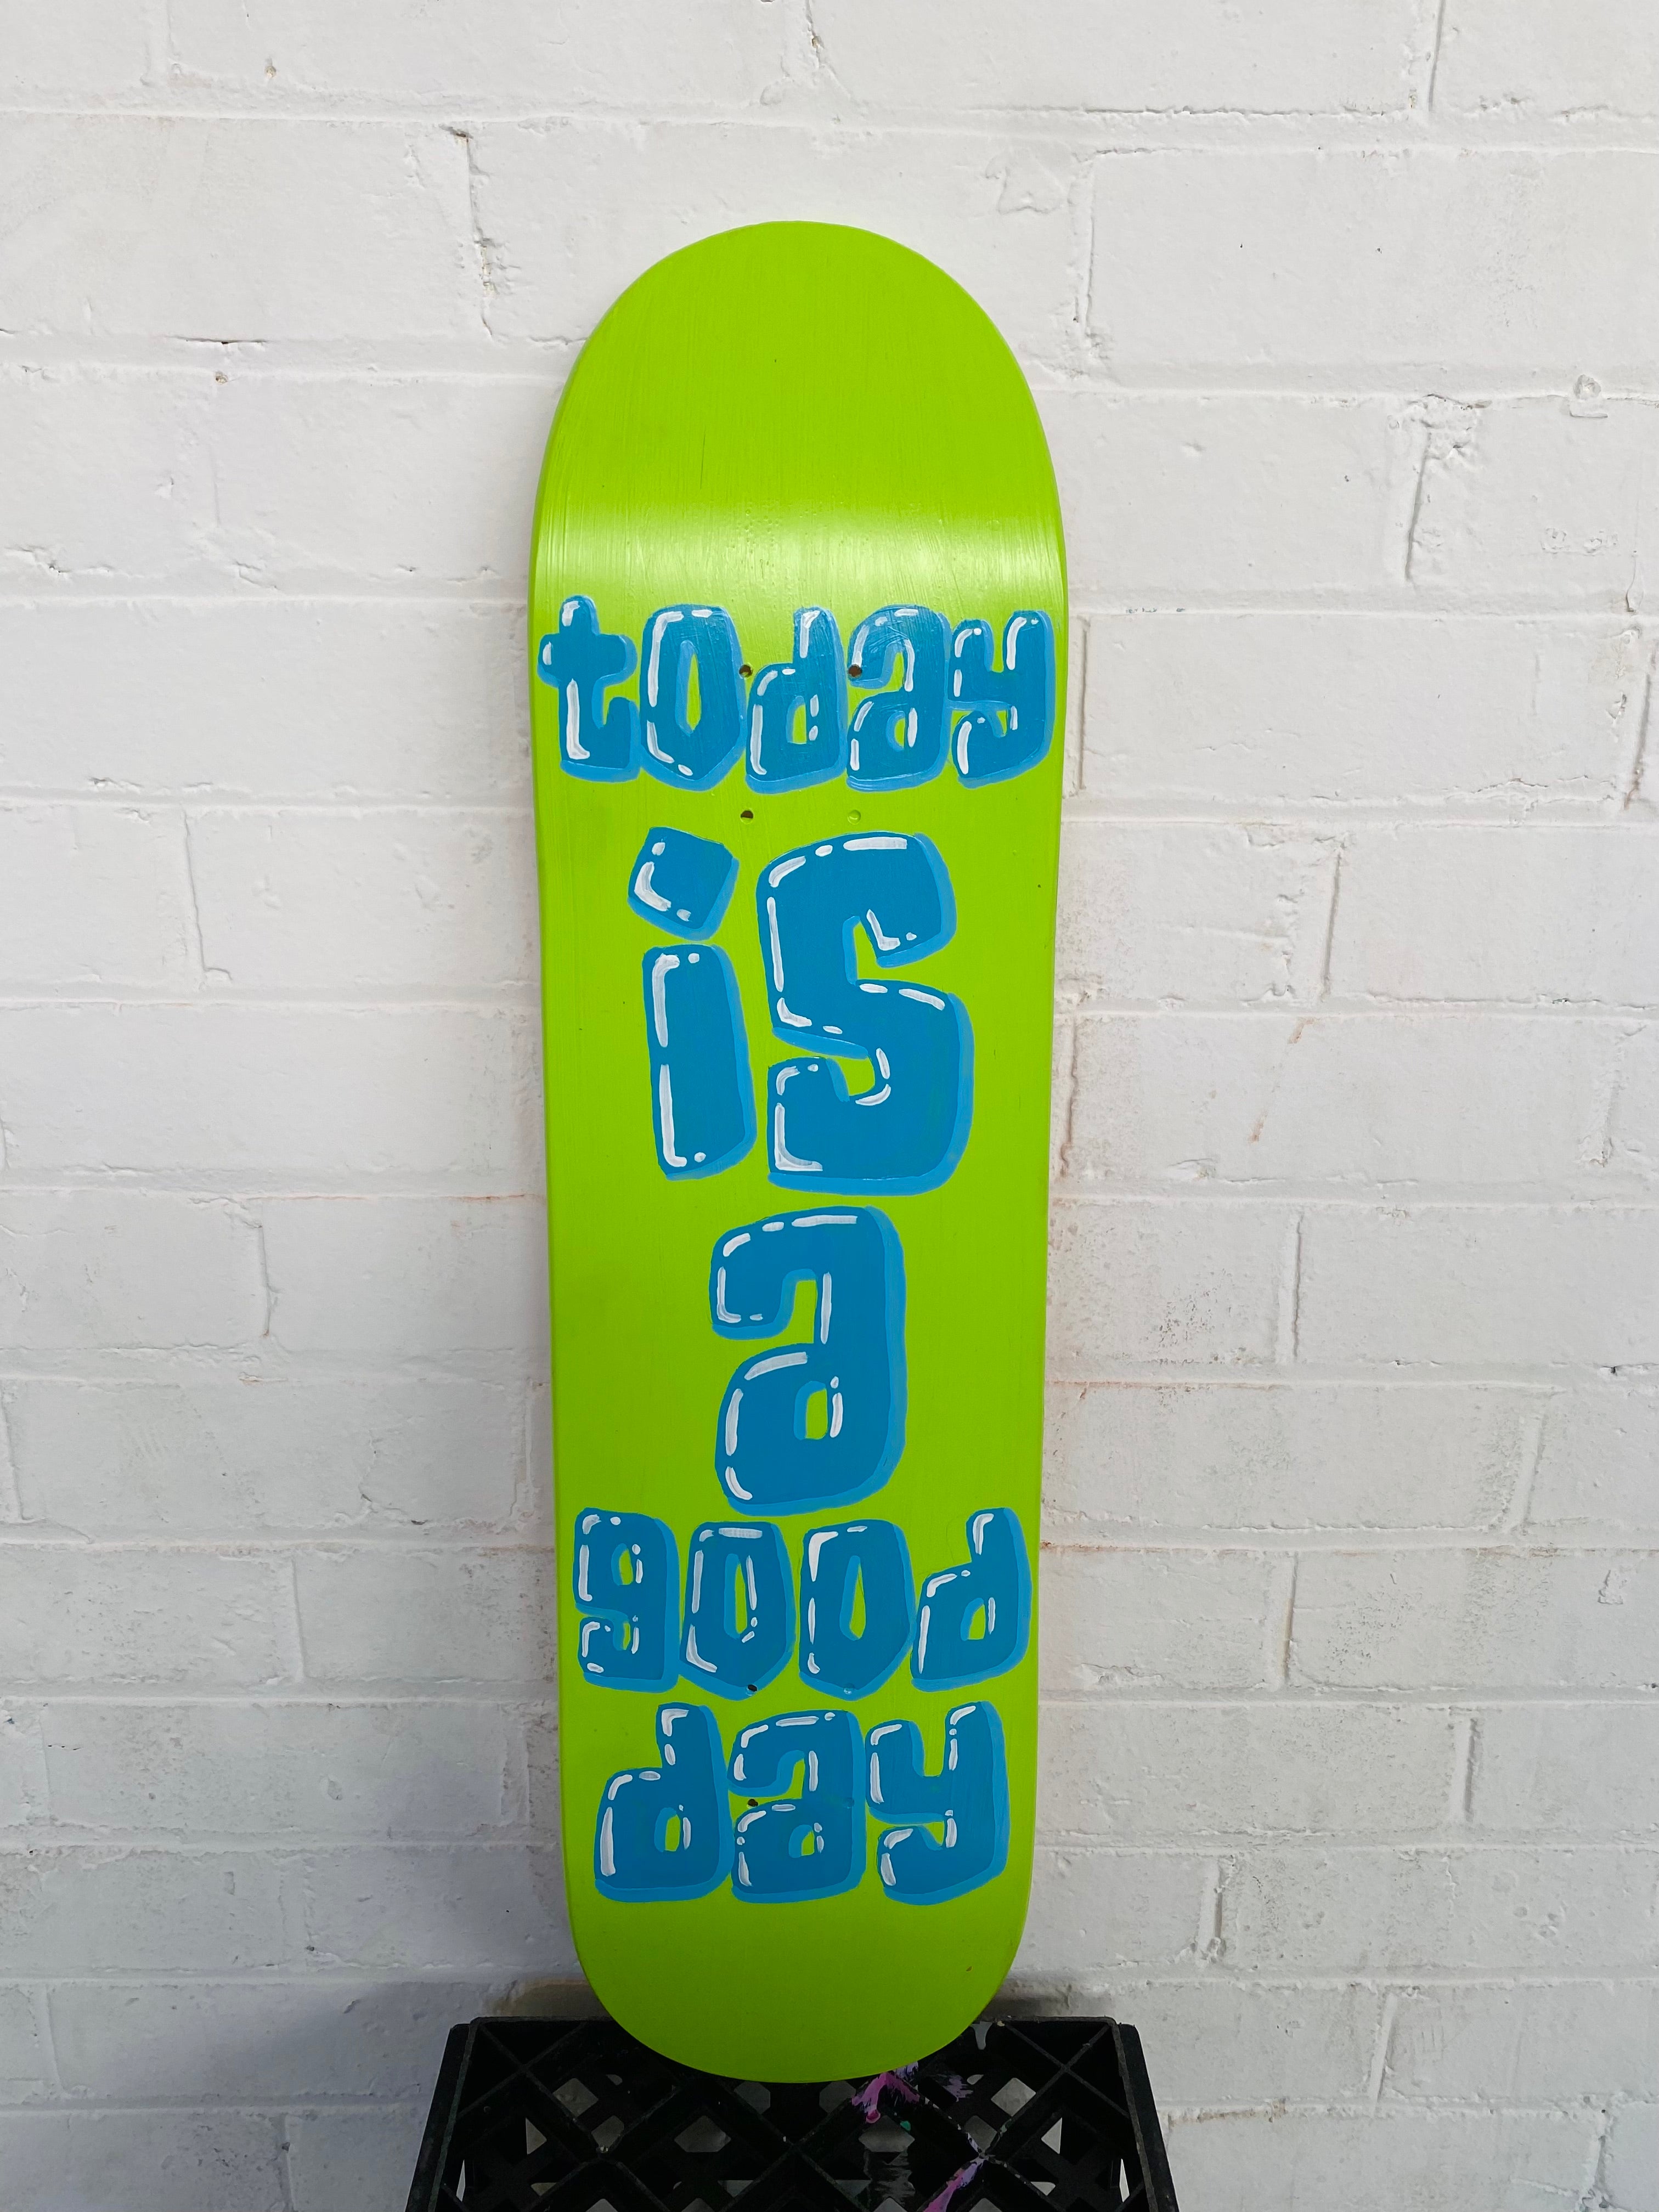 Original: "Today is a Good Day" Skateboard Artwork